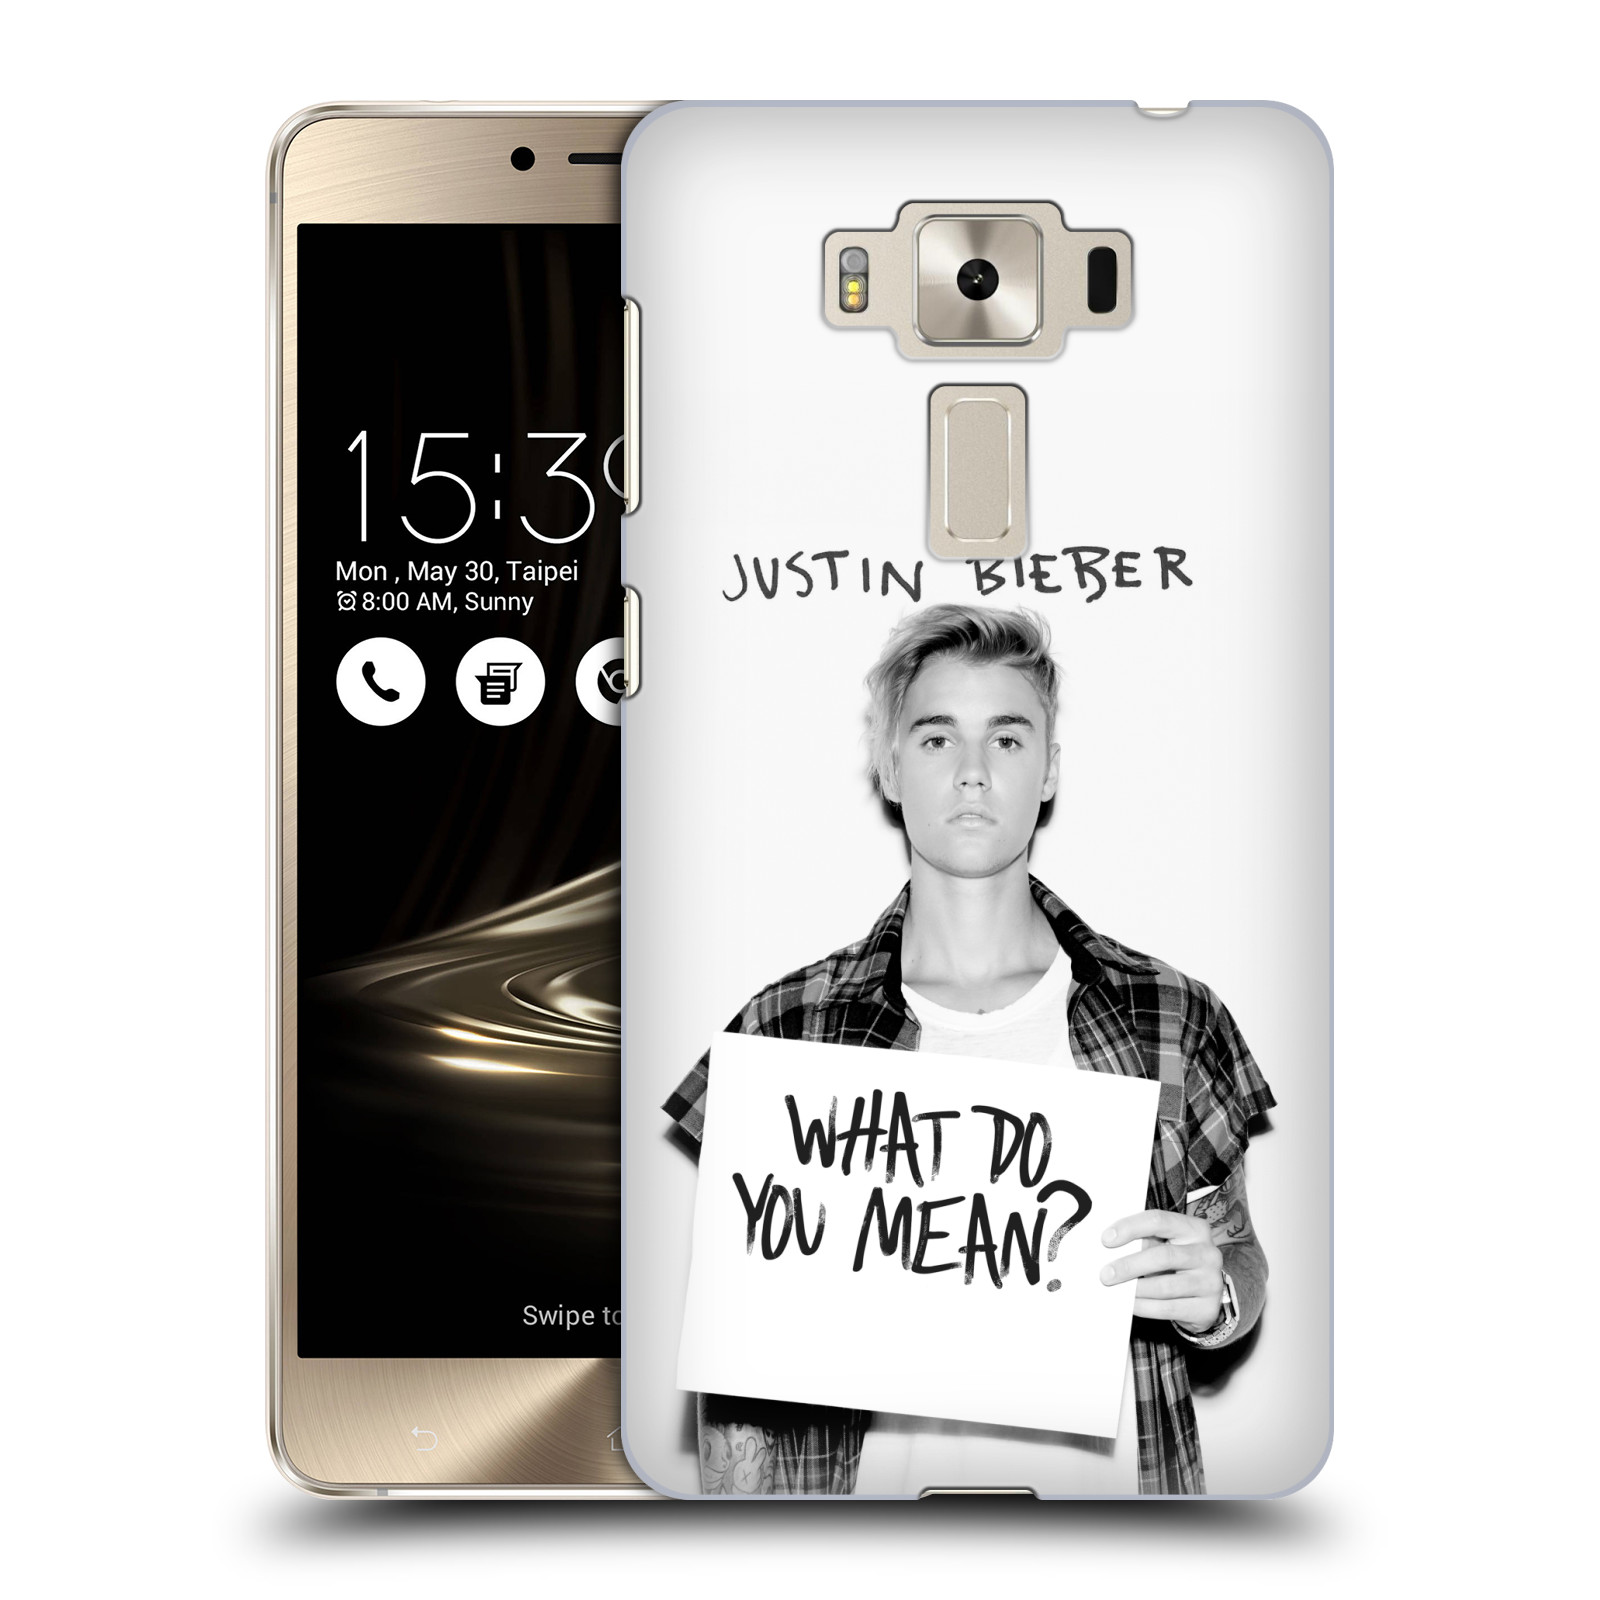 HEAD CASE plastový obal na mobil Asus Zenfone 3 DELUXE ZS550KL Justin Bieber foto Purpose What do you mean